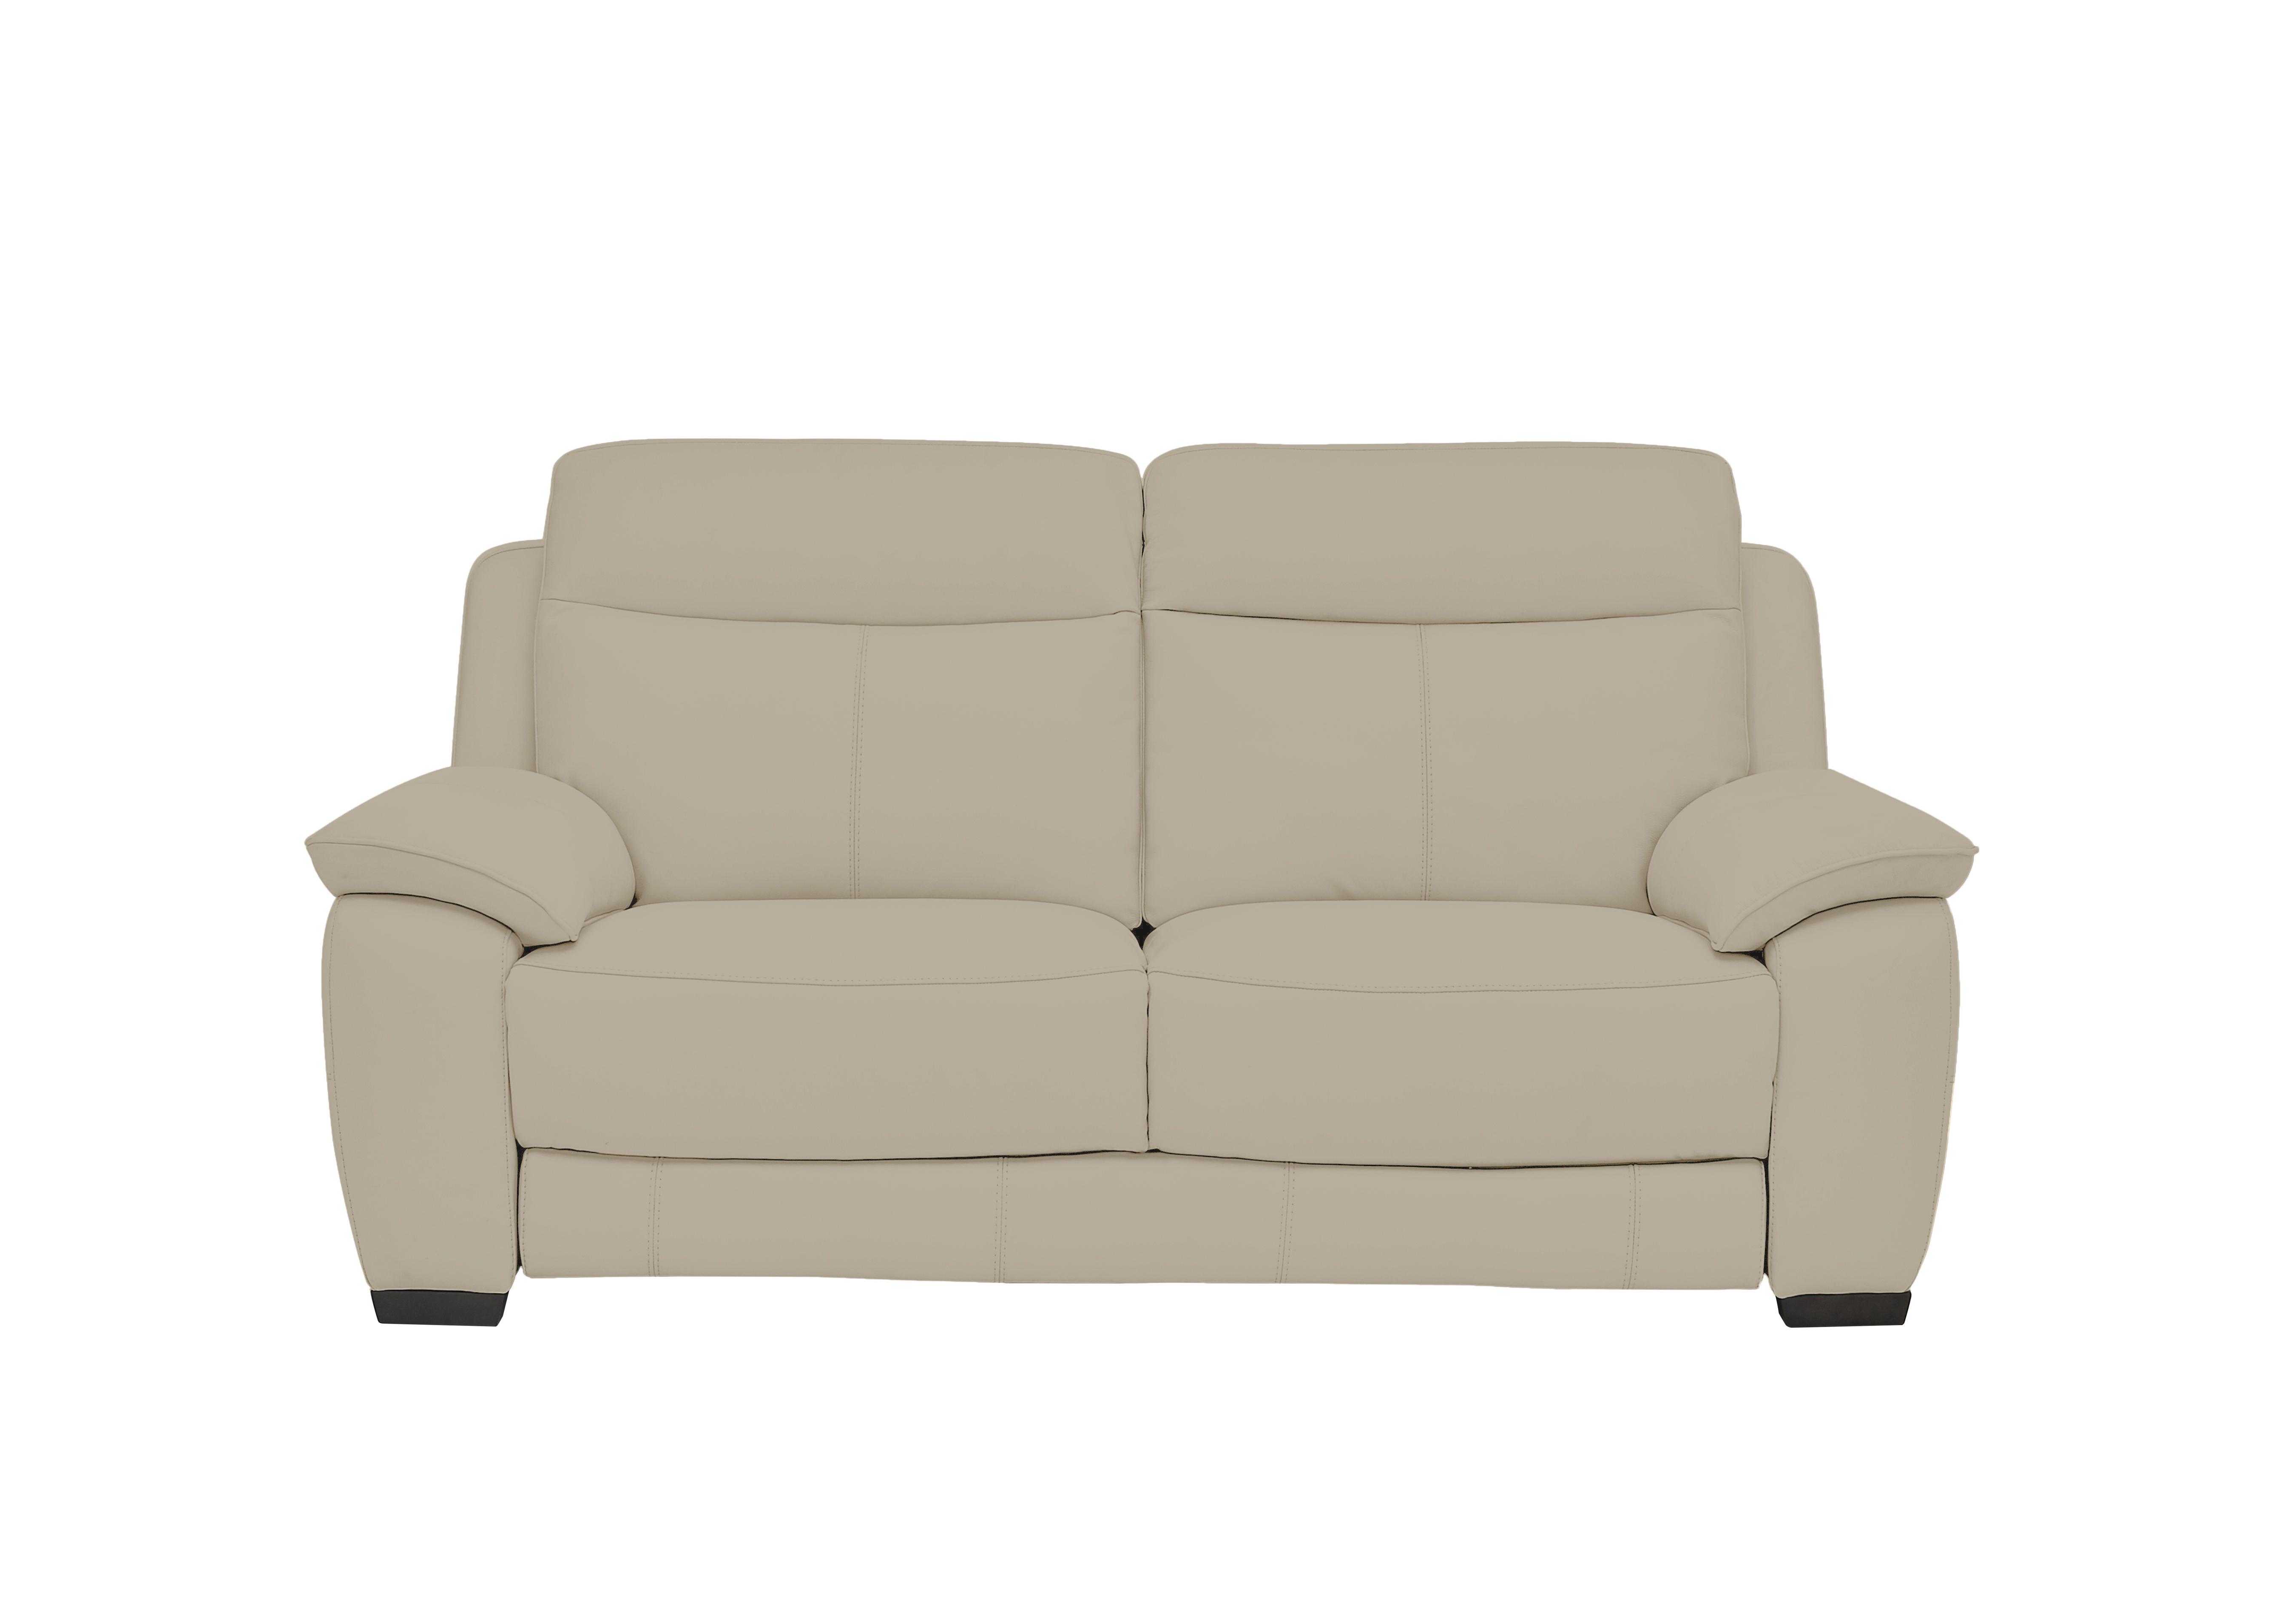 Starlight Express 2 Seater Leather Sofa in Bv-041e Dapple Grey on Furniture Village